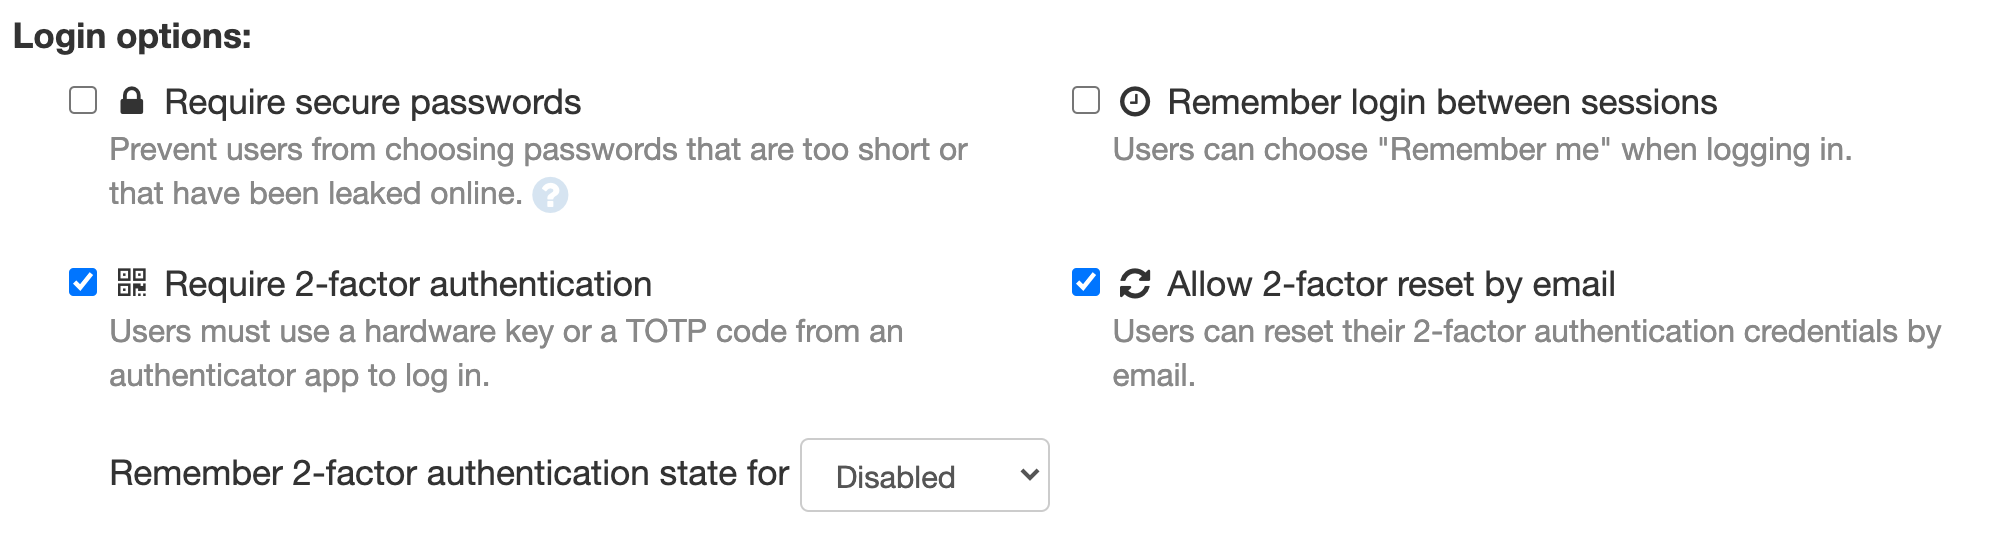 Users Service login options